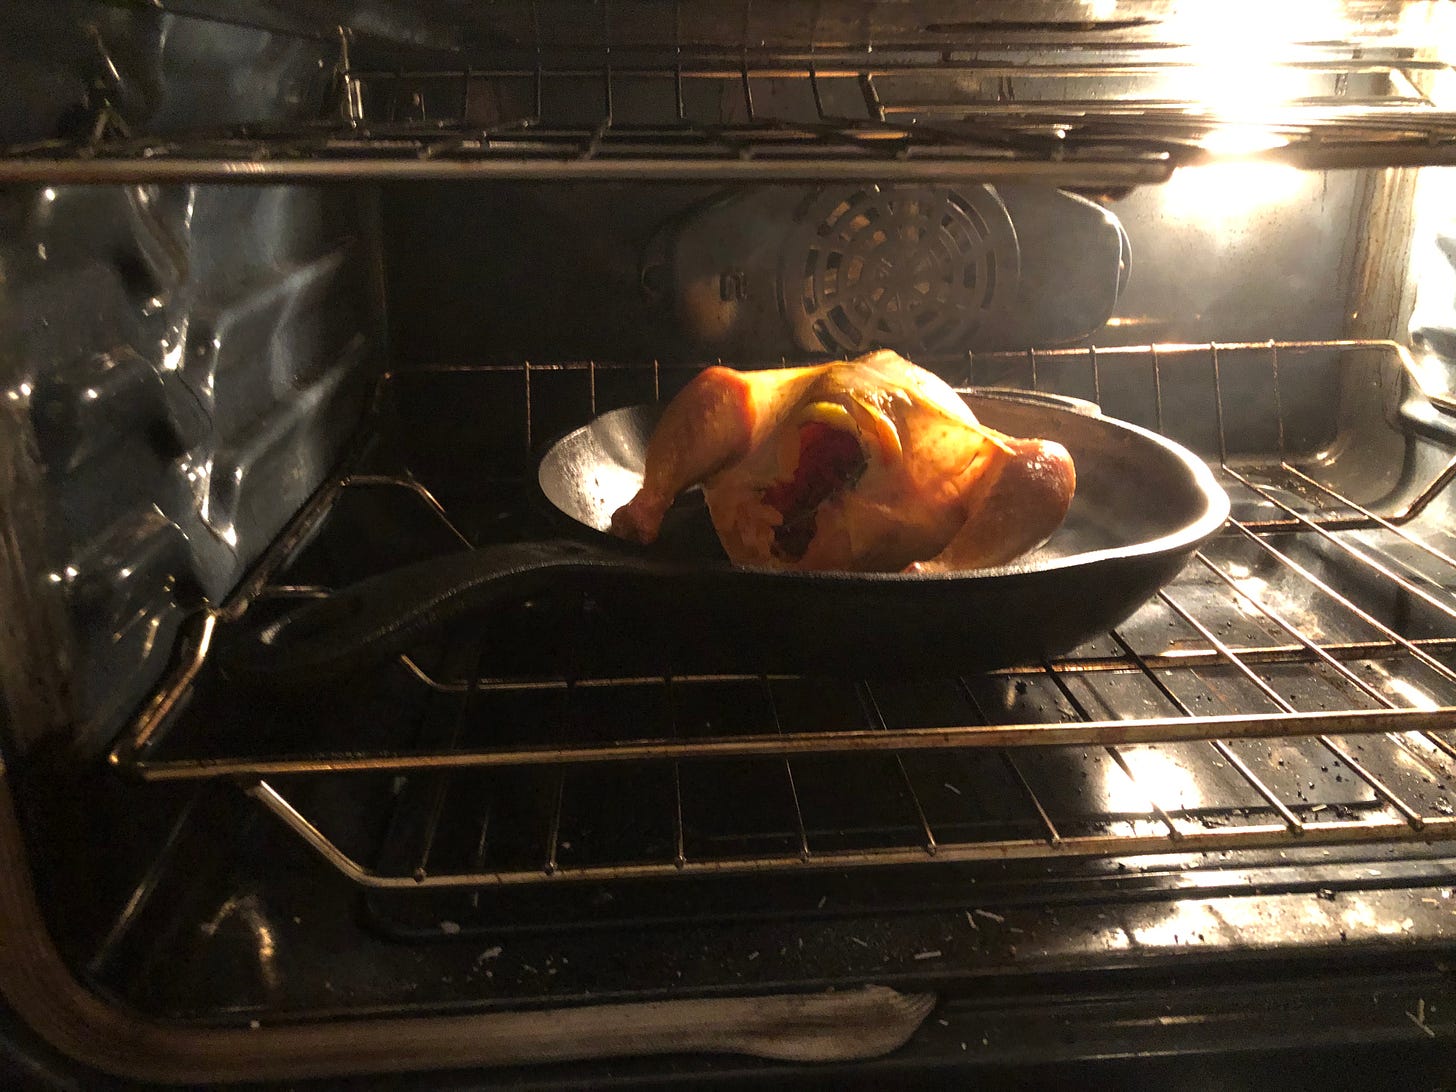 Chicken in pan in oven